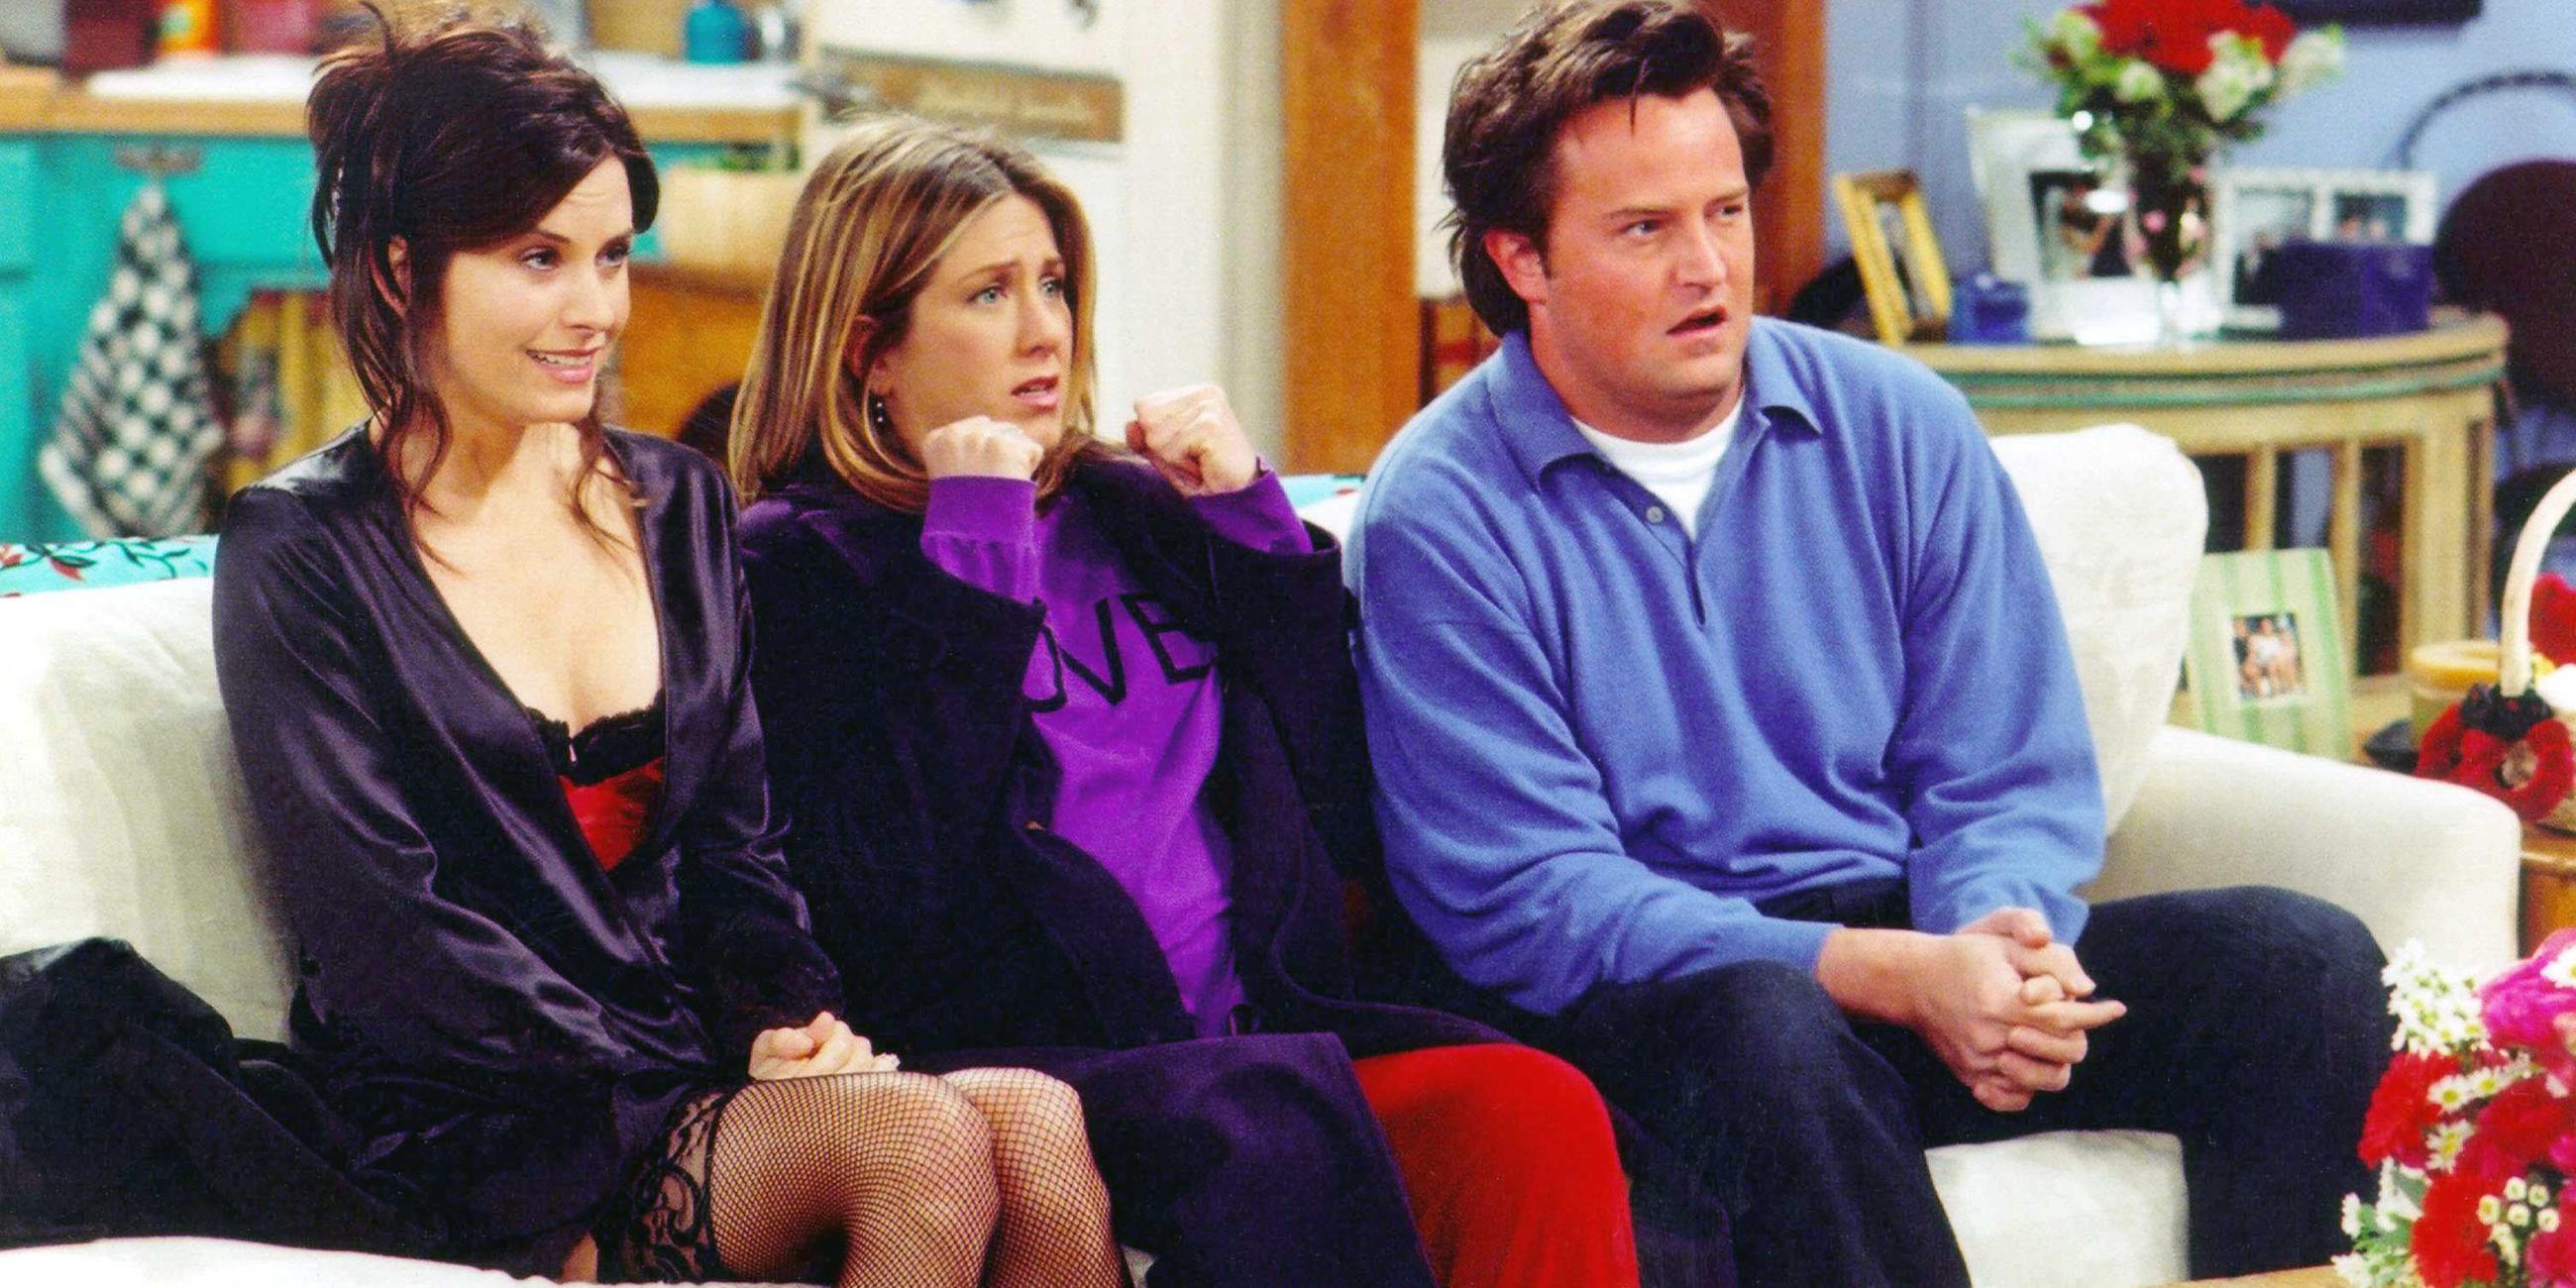 Szene aus der Serie "Friends" - 2003